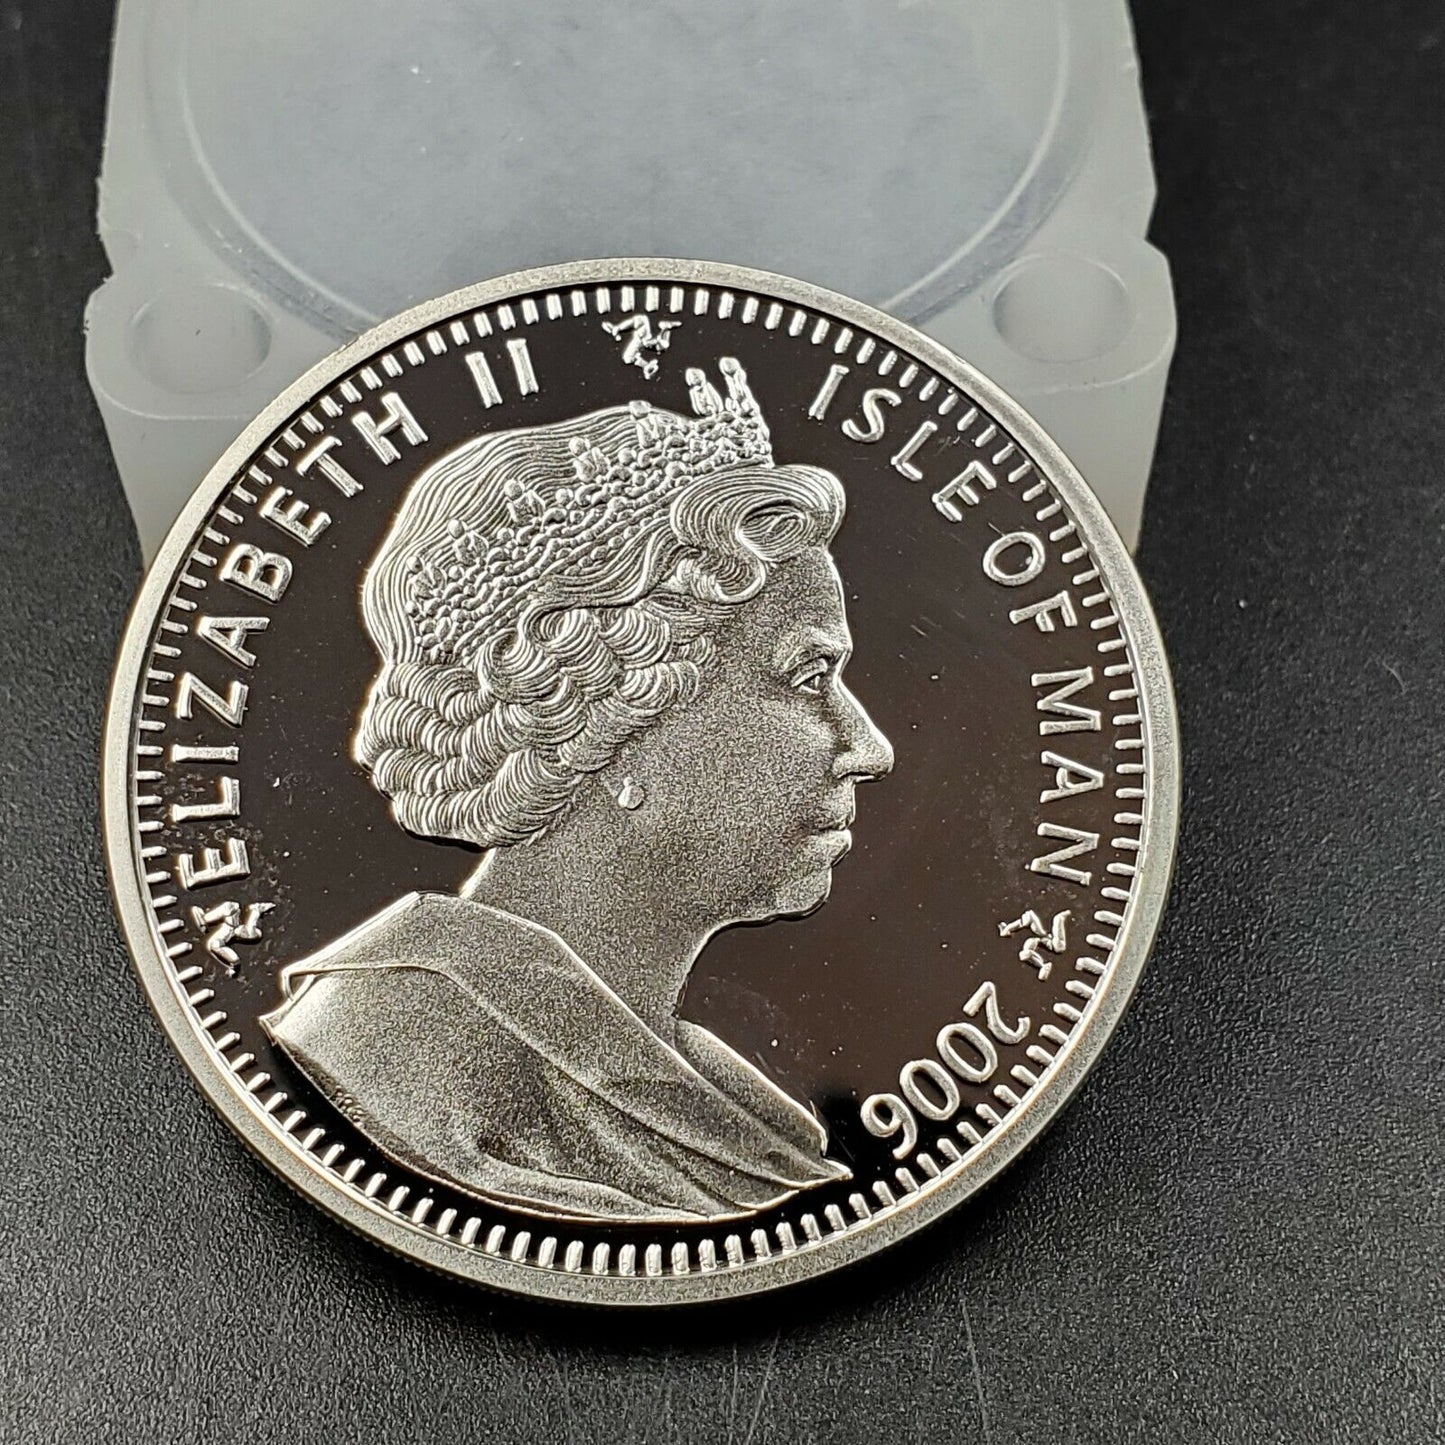 2006 Pobjoy Mint Isle of Man Battle of Trafalgar Gem Proof Silver Coin Napoleon